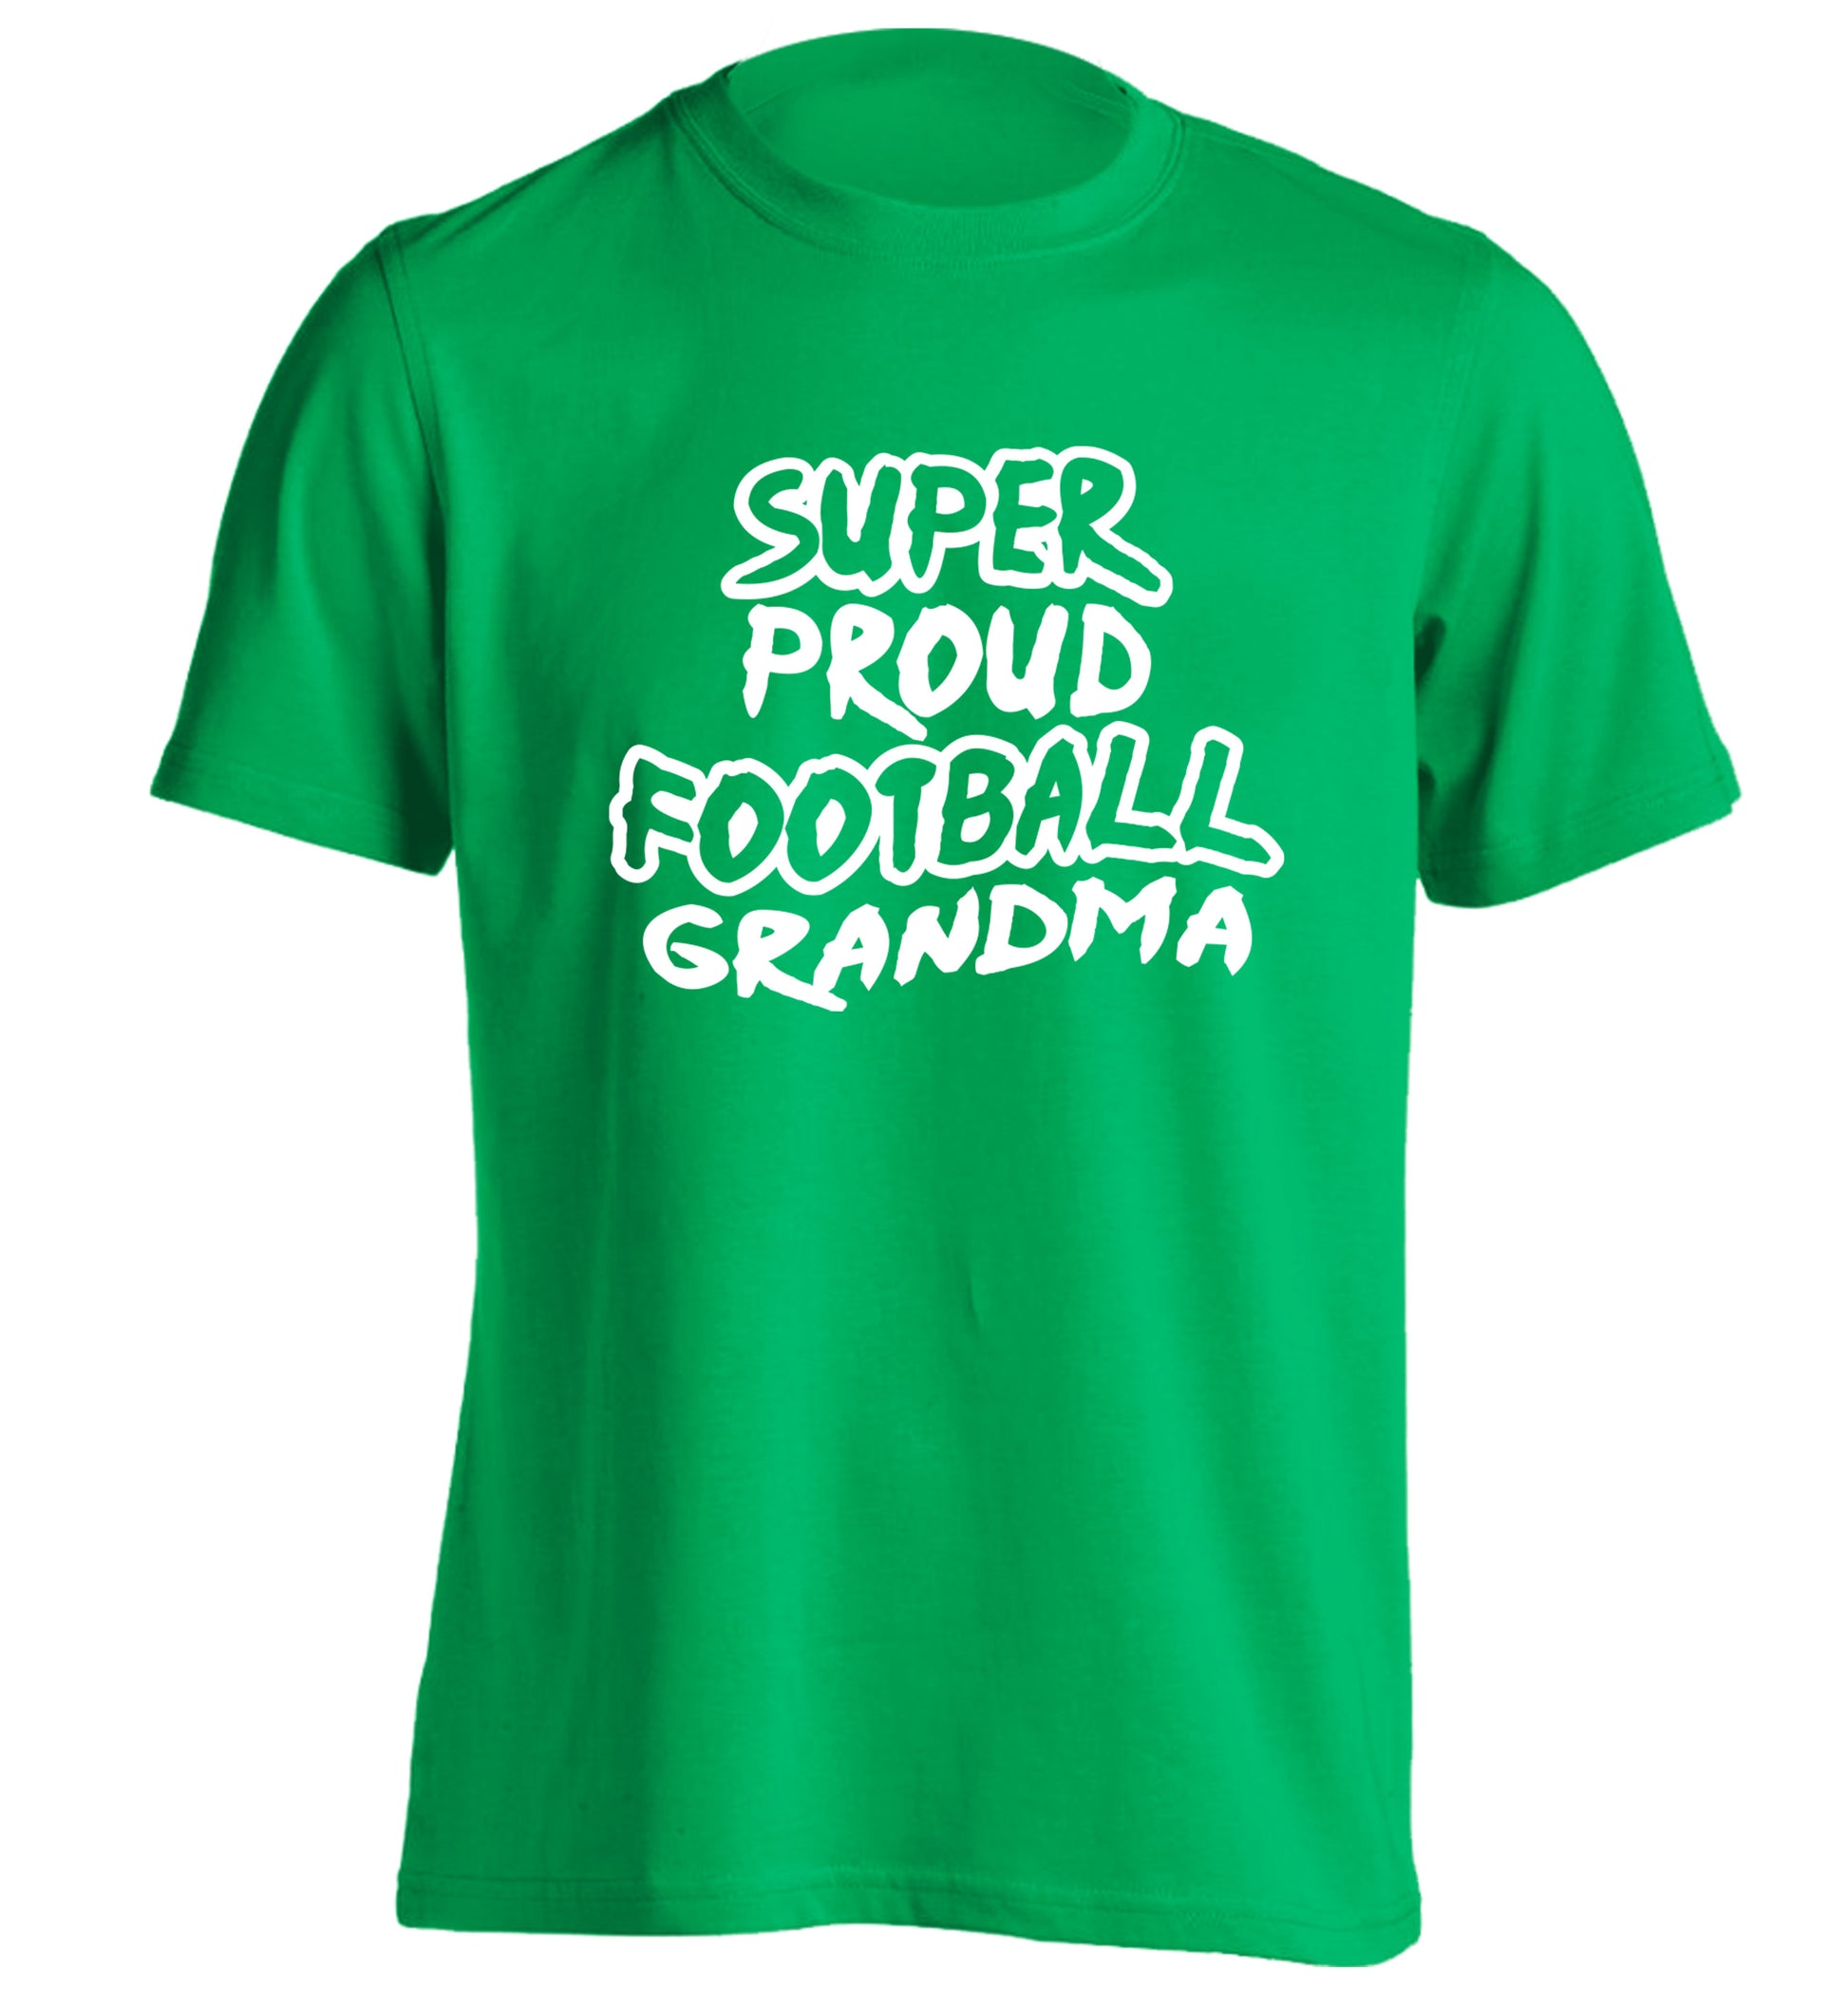 Super proud football grandma adults unisexgreen Tshirt 2XL